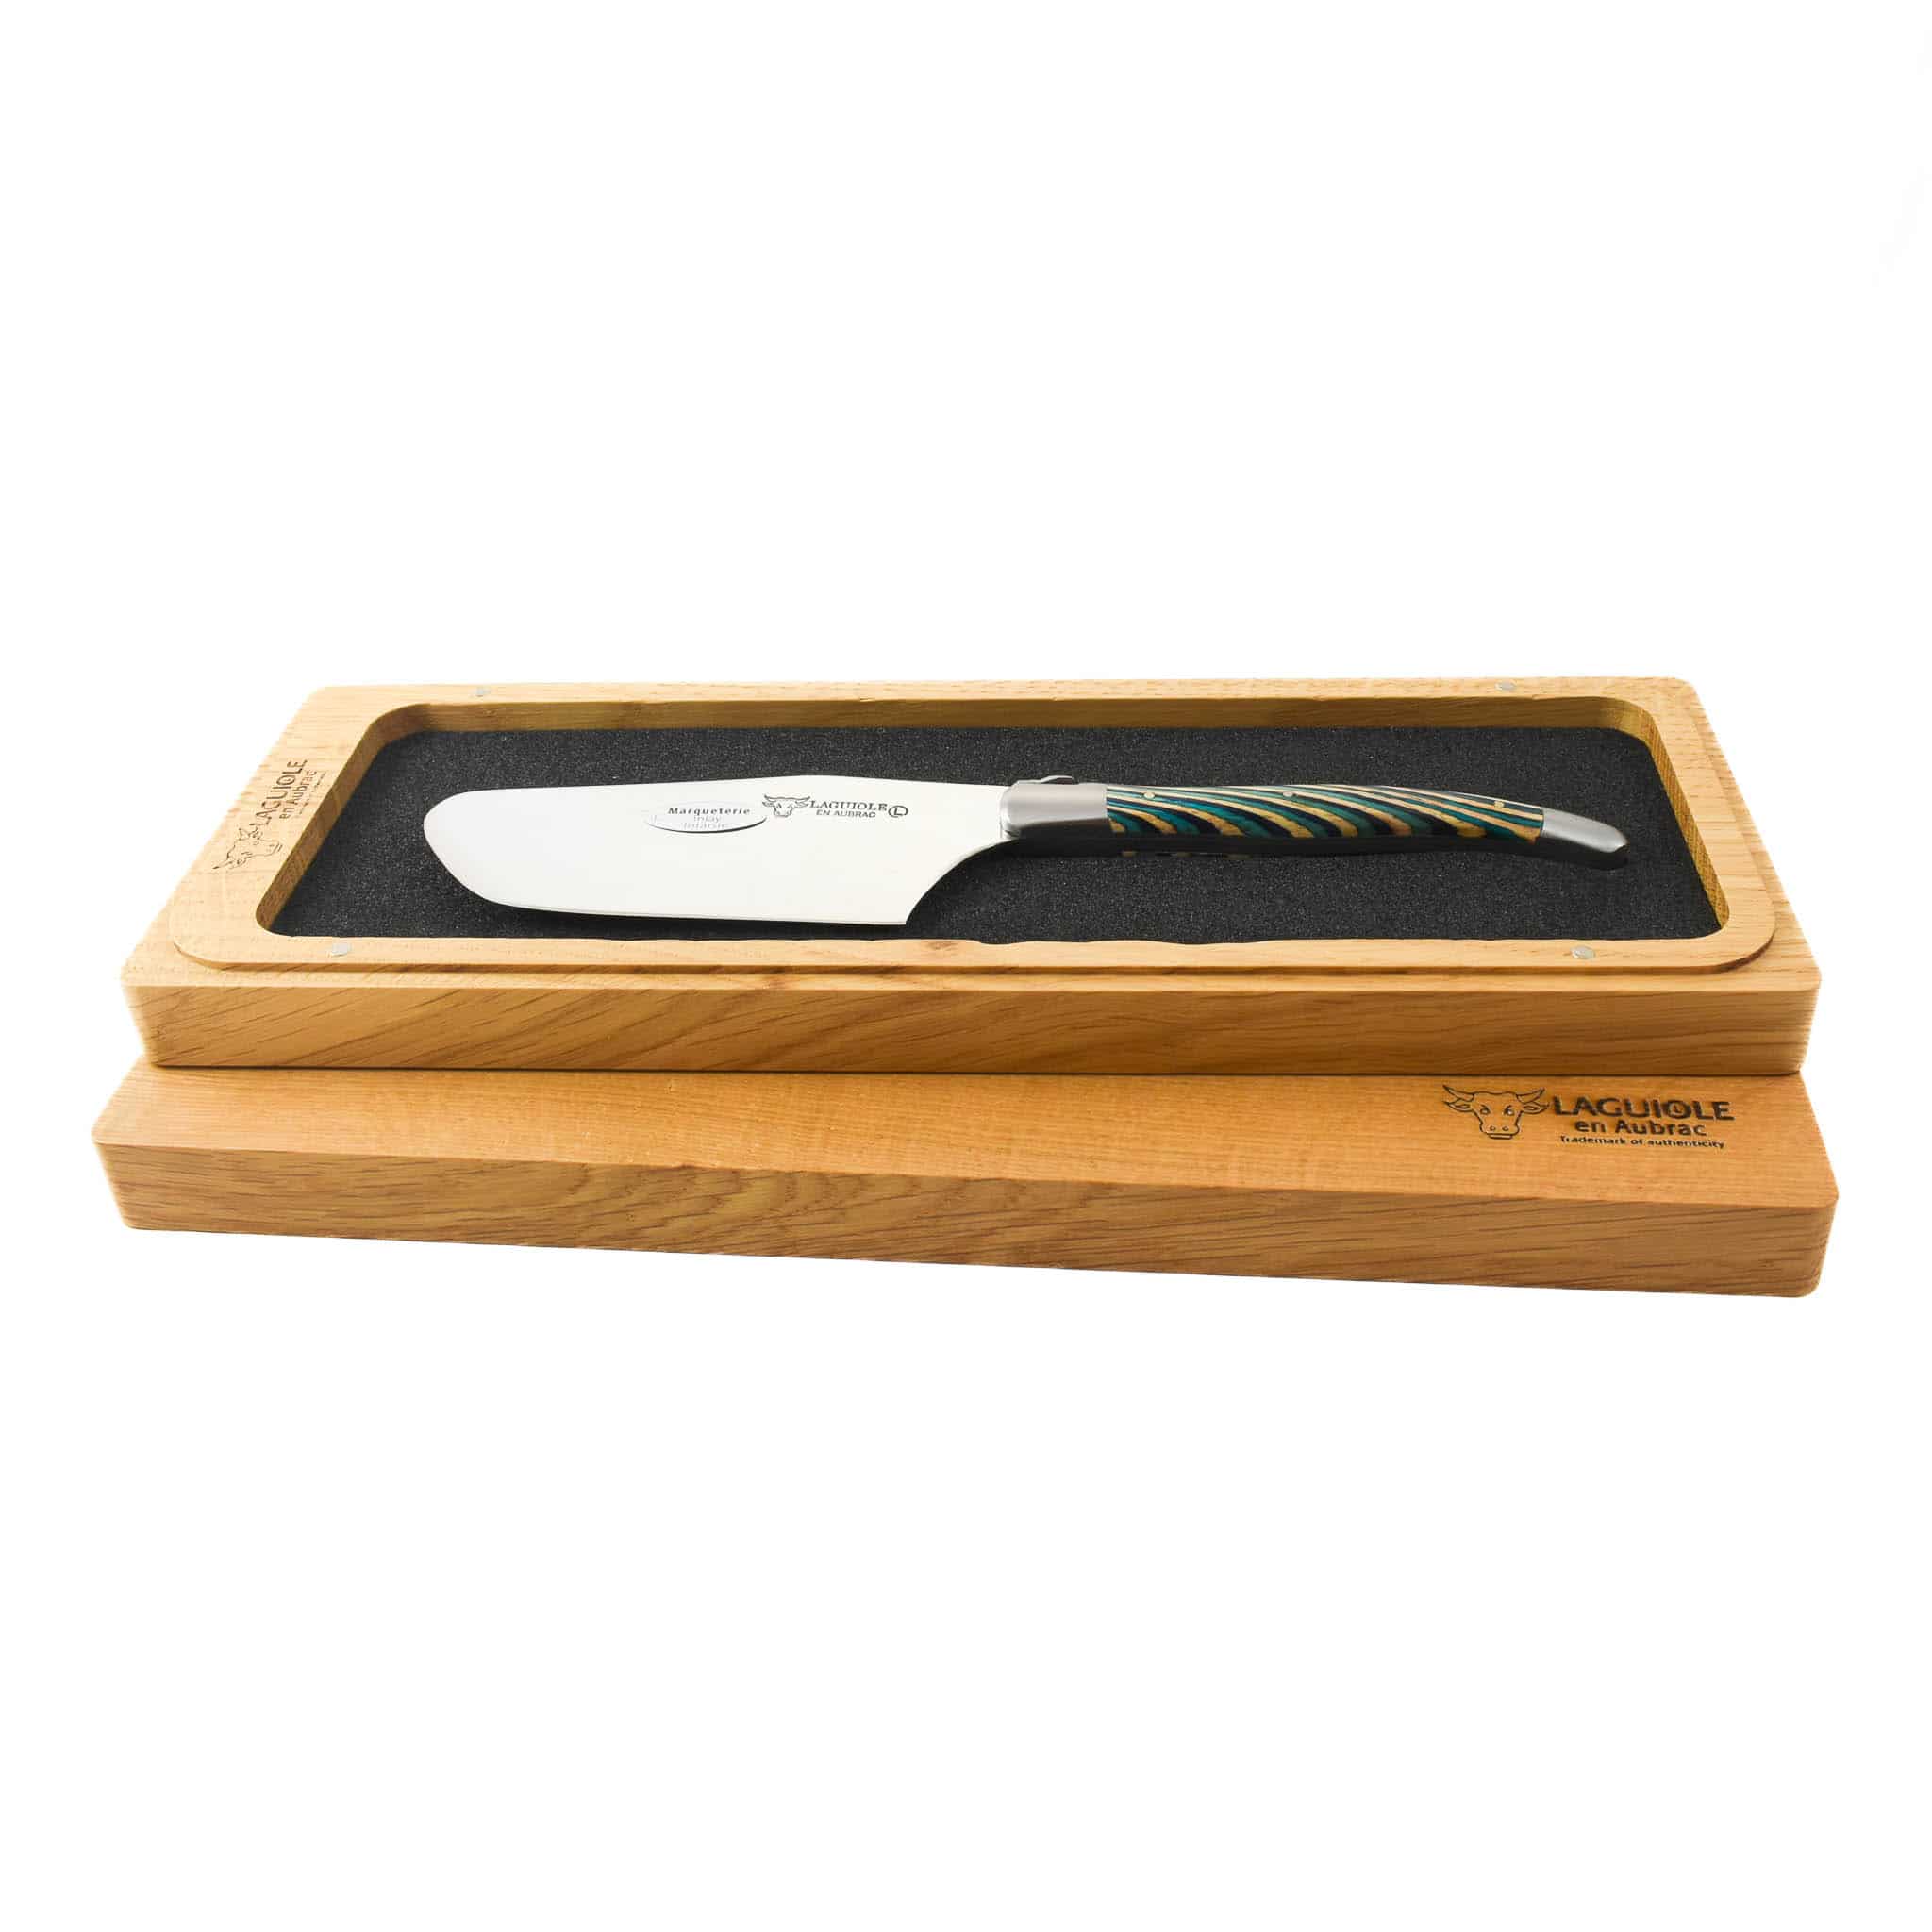 Laguiole en Aubrac Turquoise Hard Cheese Knife, Striped Wood